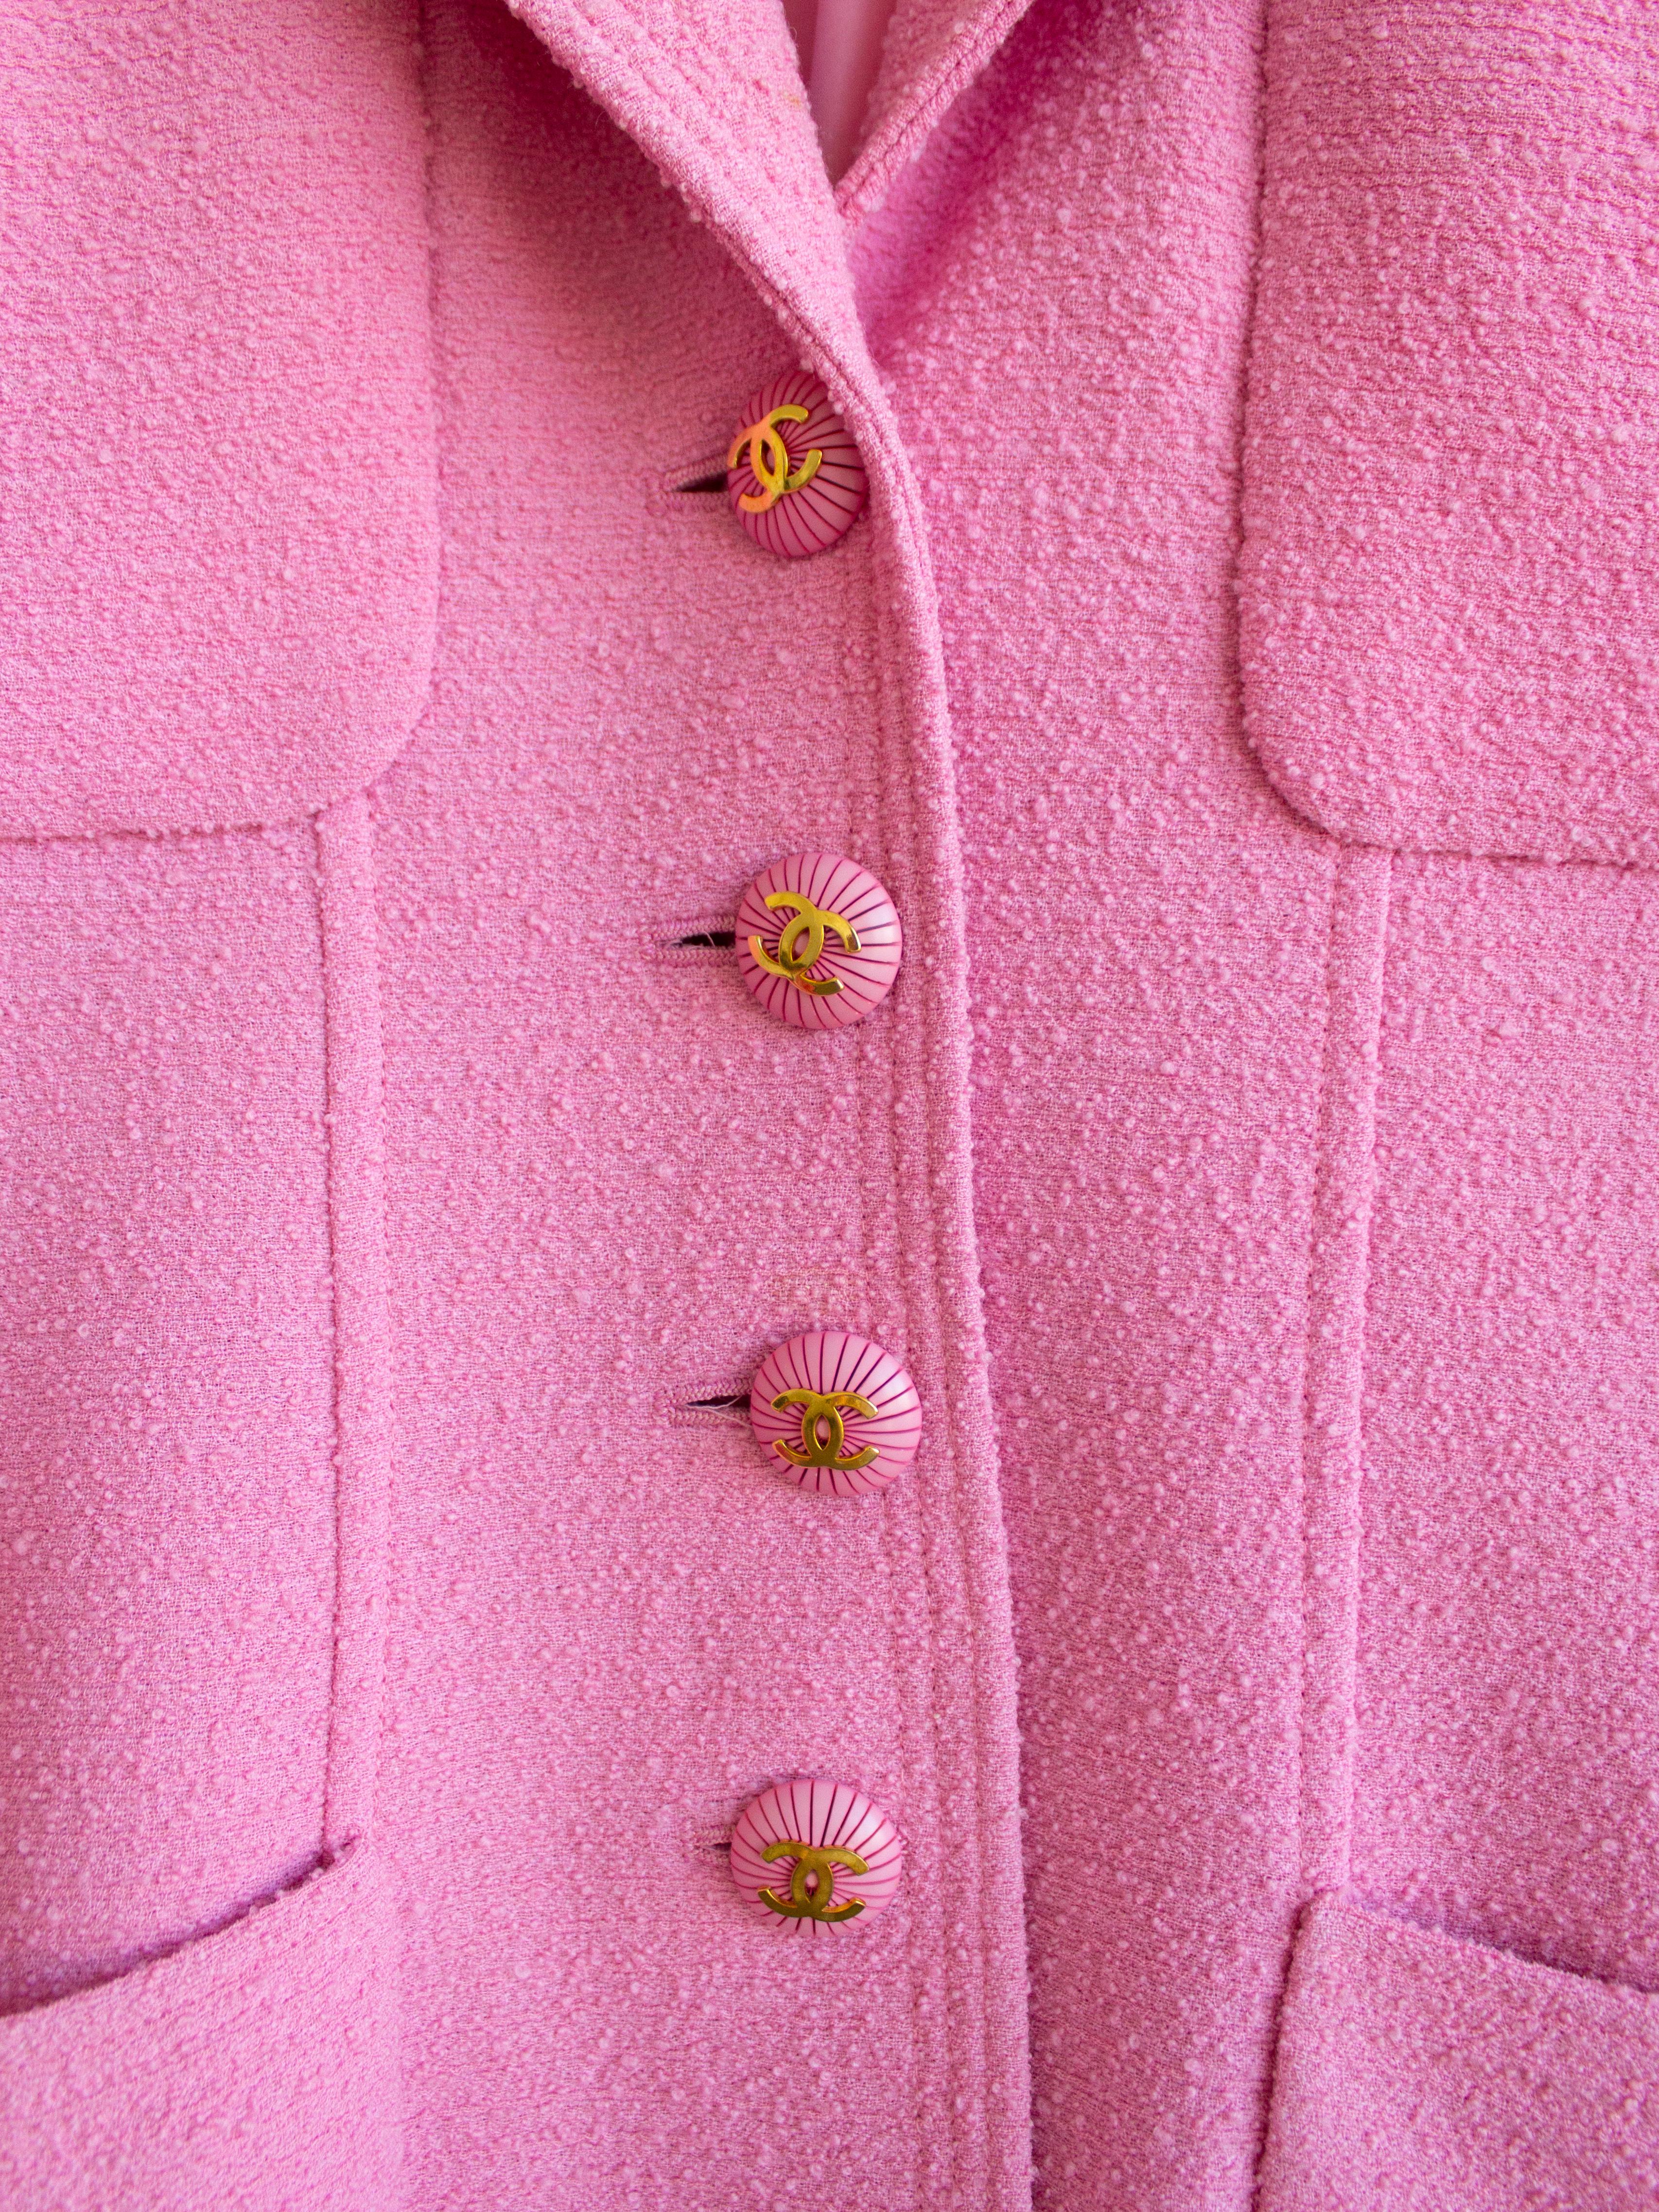 Rare Chanel Vintage Cruise 1993 Bubblegum Pink Gold 93C Tweed Jacket Skirt Suit 3